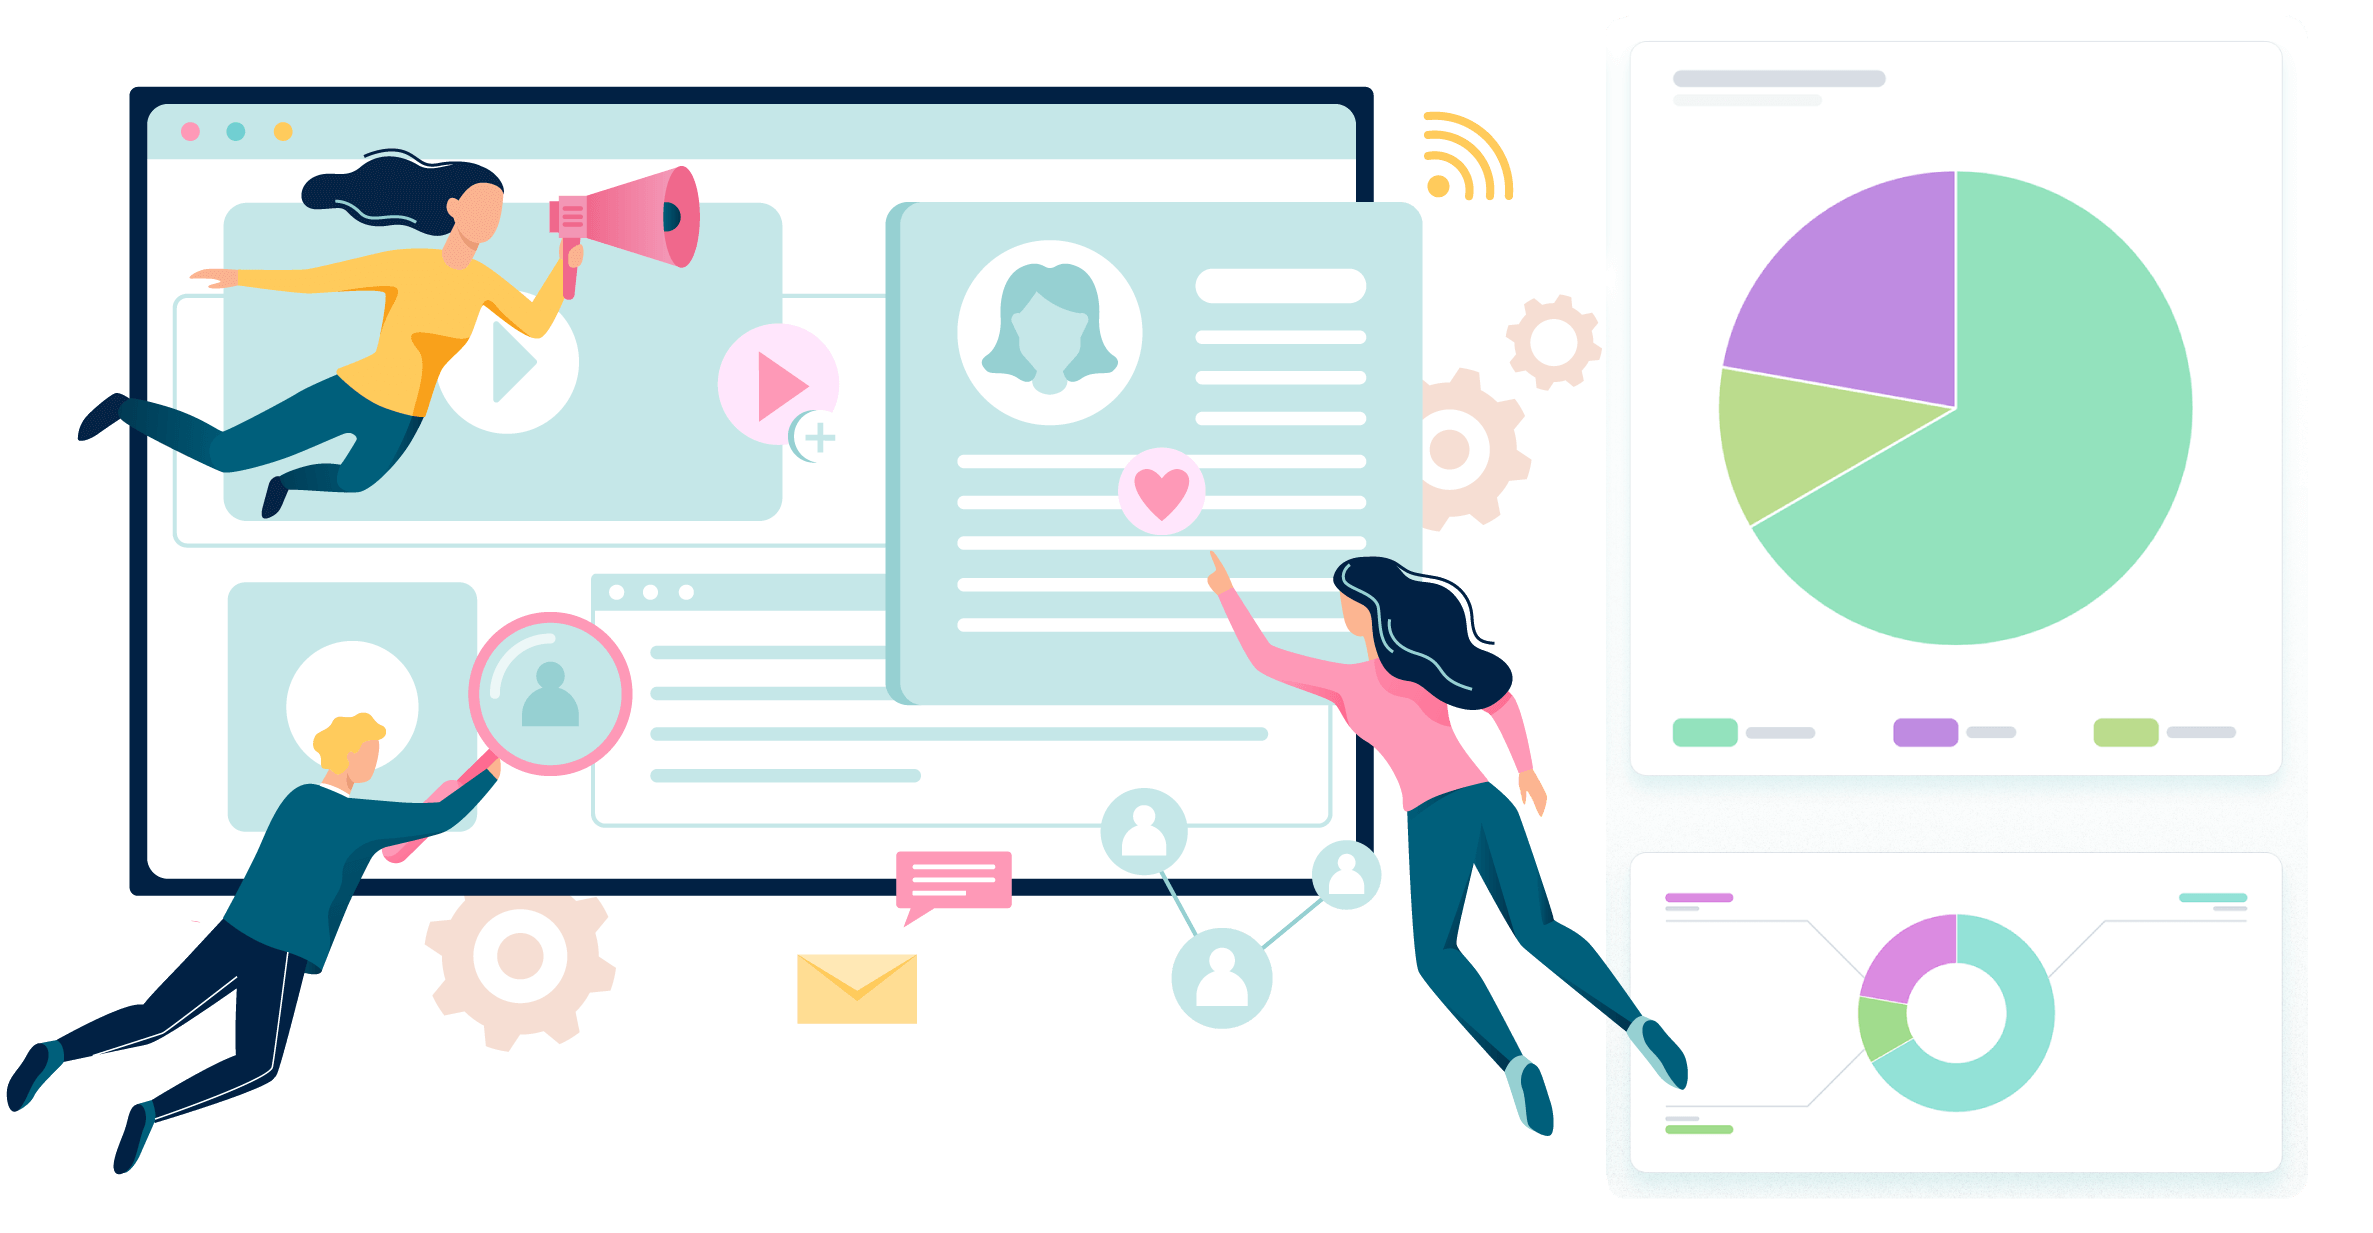 Web design and analytics illustration depicting web development and data-driven digital marketing strategies